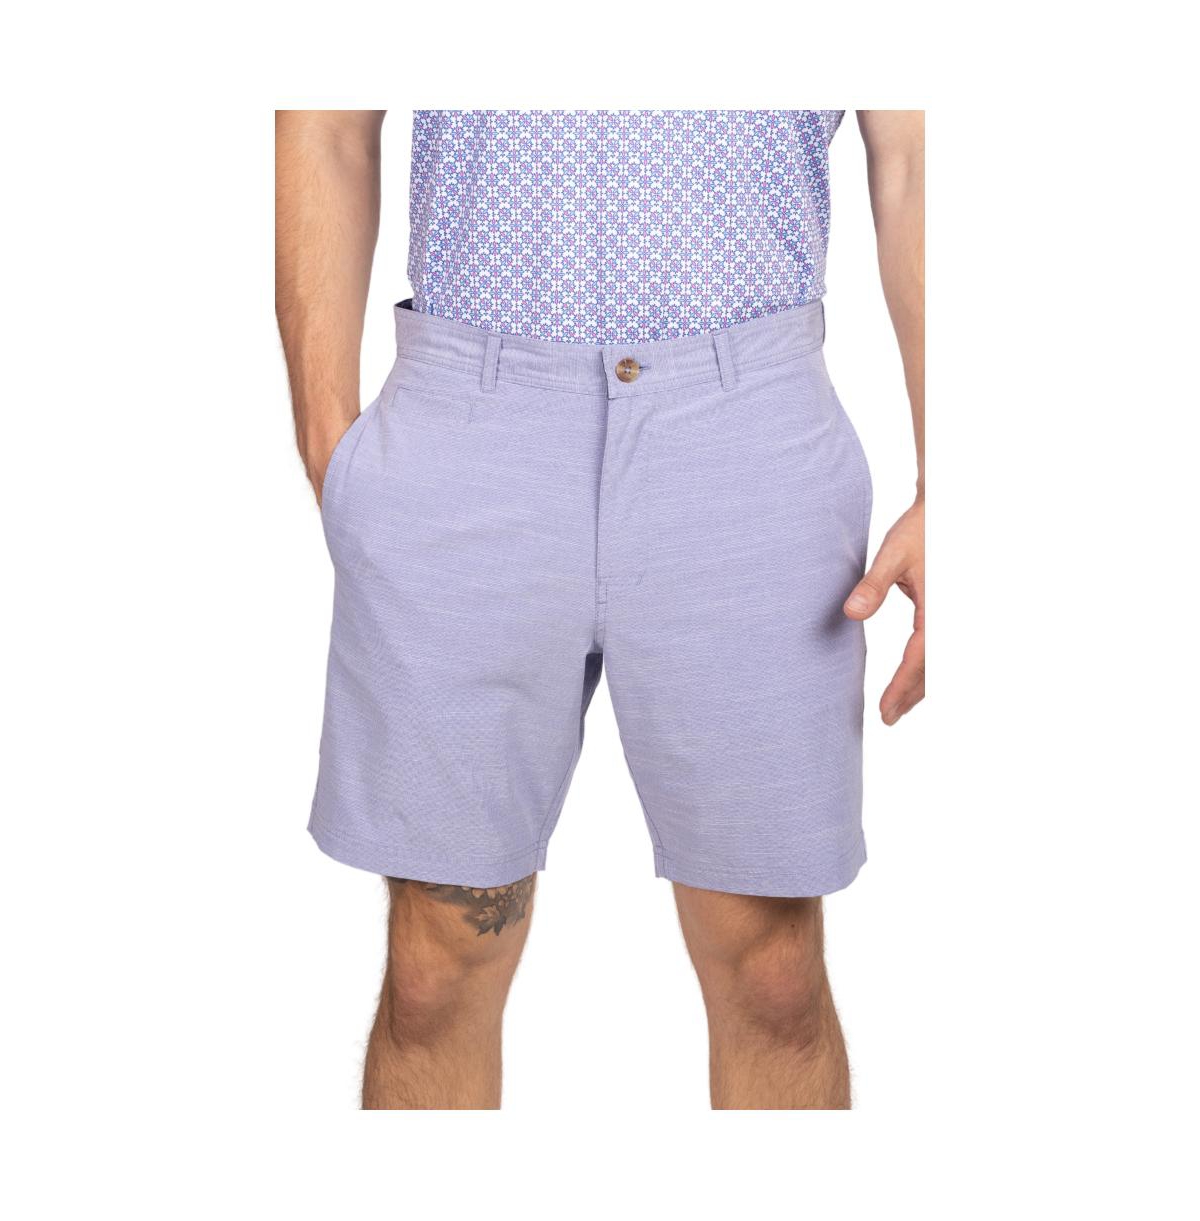 Men's Textured Performance Shorts - Peri blue